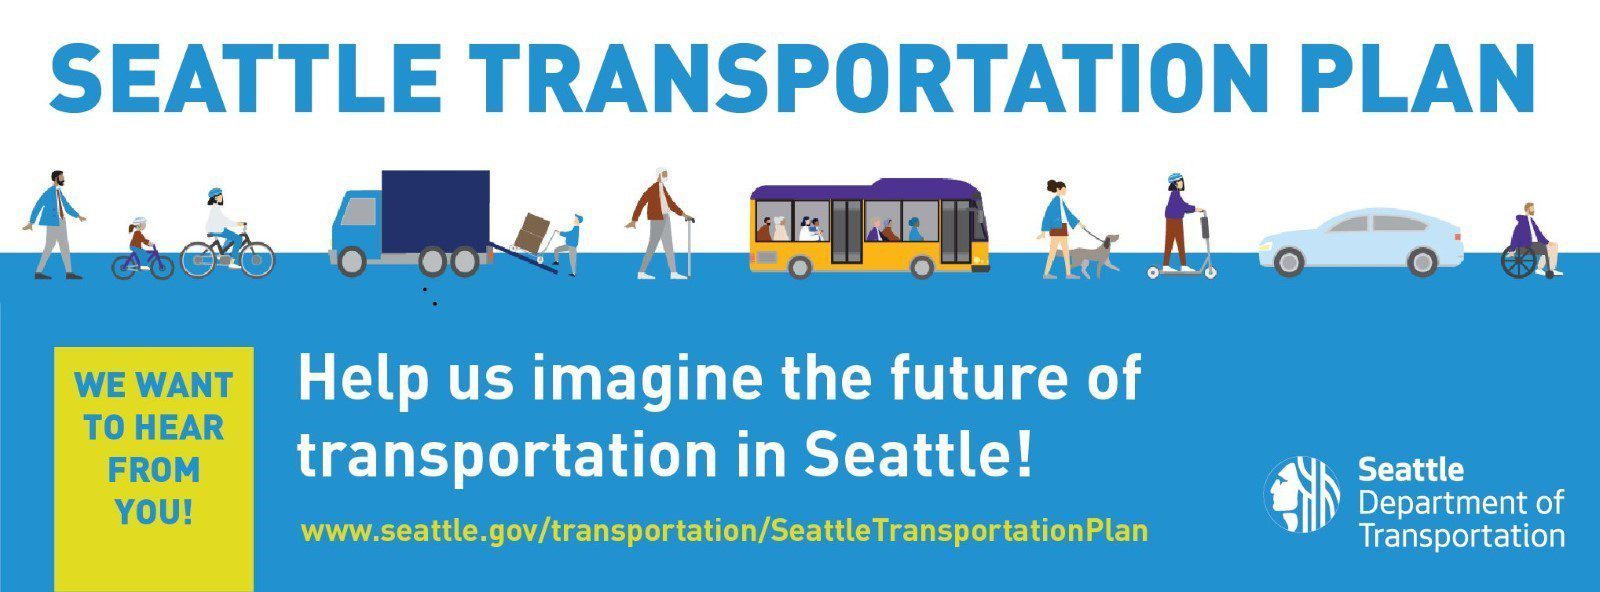 Help us imagine the future of transportation in Seattle - visit our online Seattle Transportation Plan hub today!